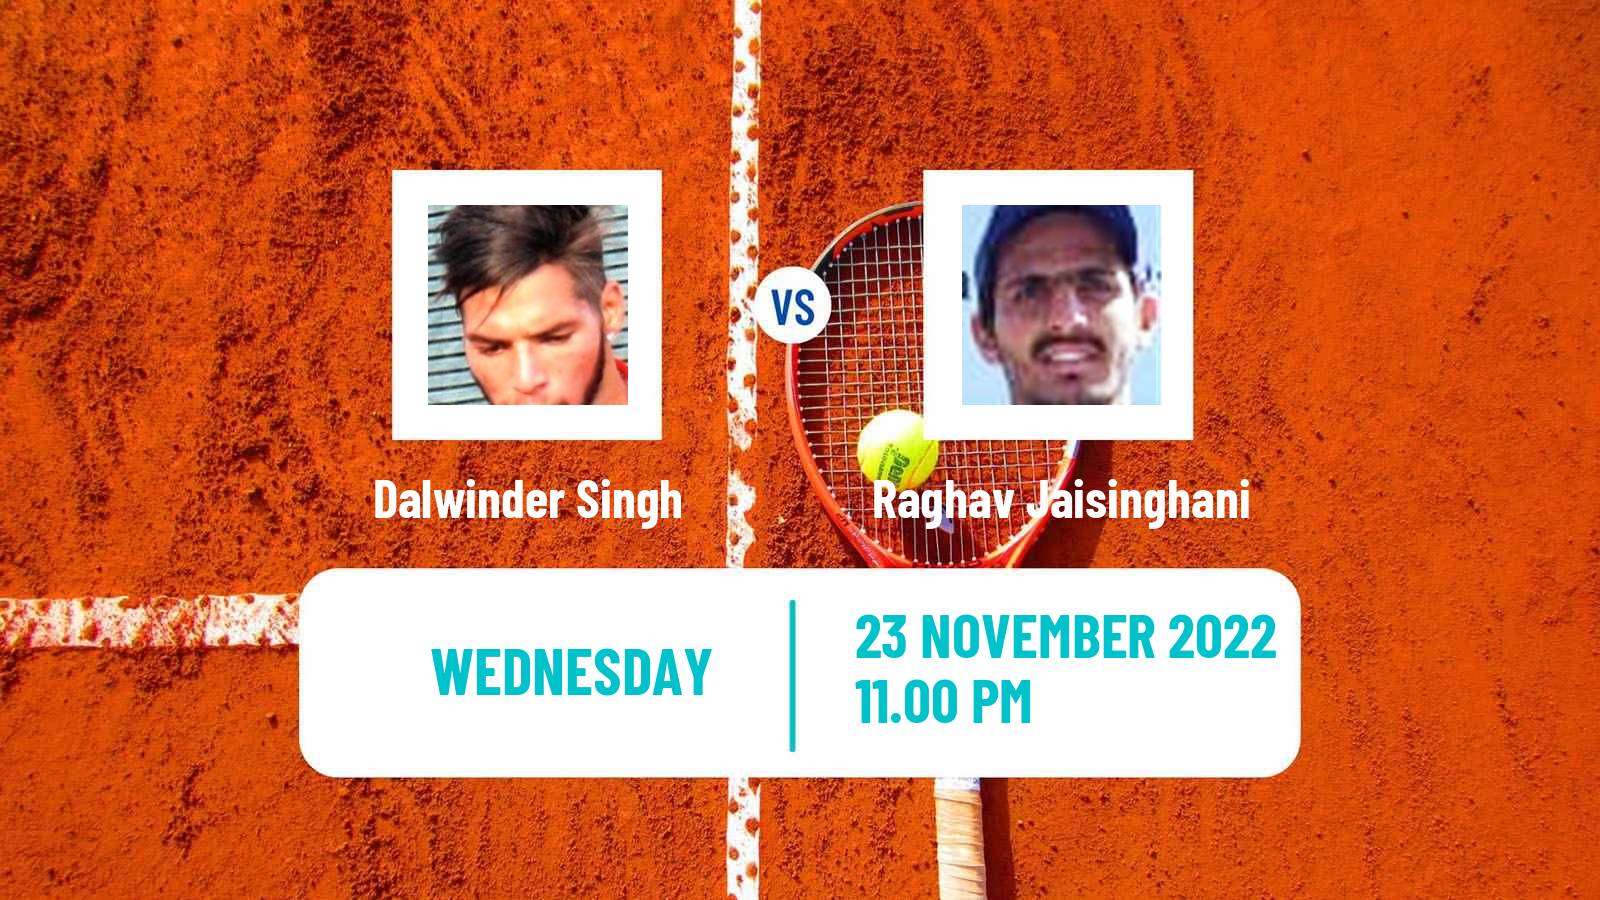 Tennis ITF Tournaments Dalwinder Singh - Raghav Jaisinghani